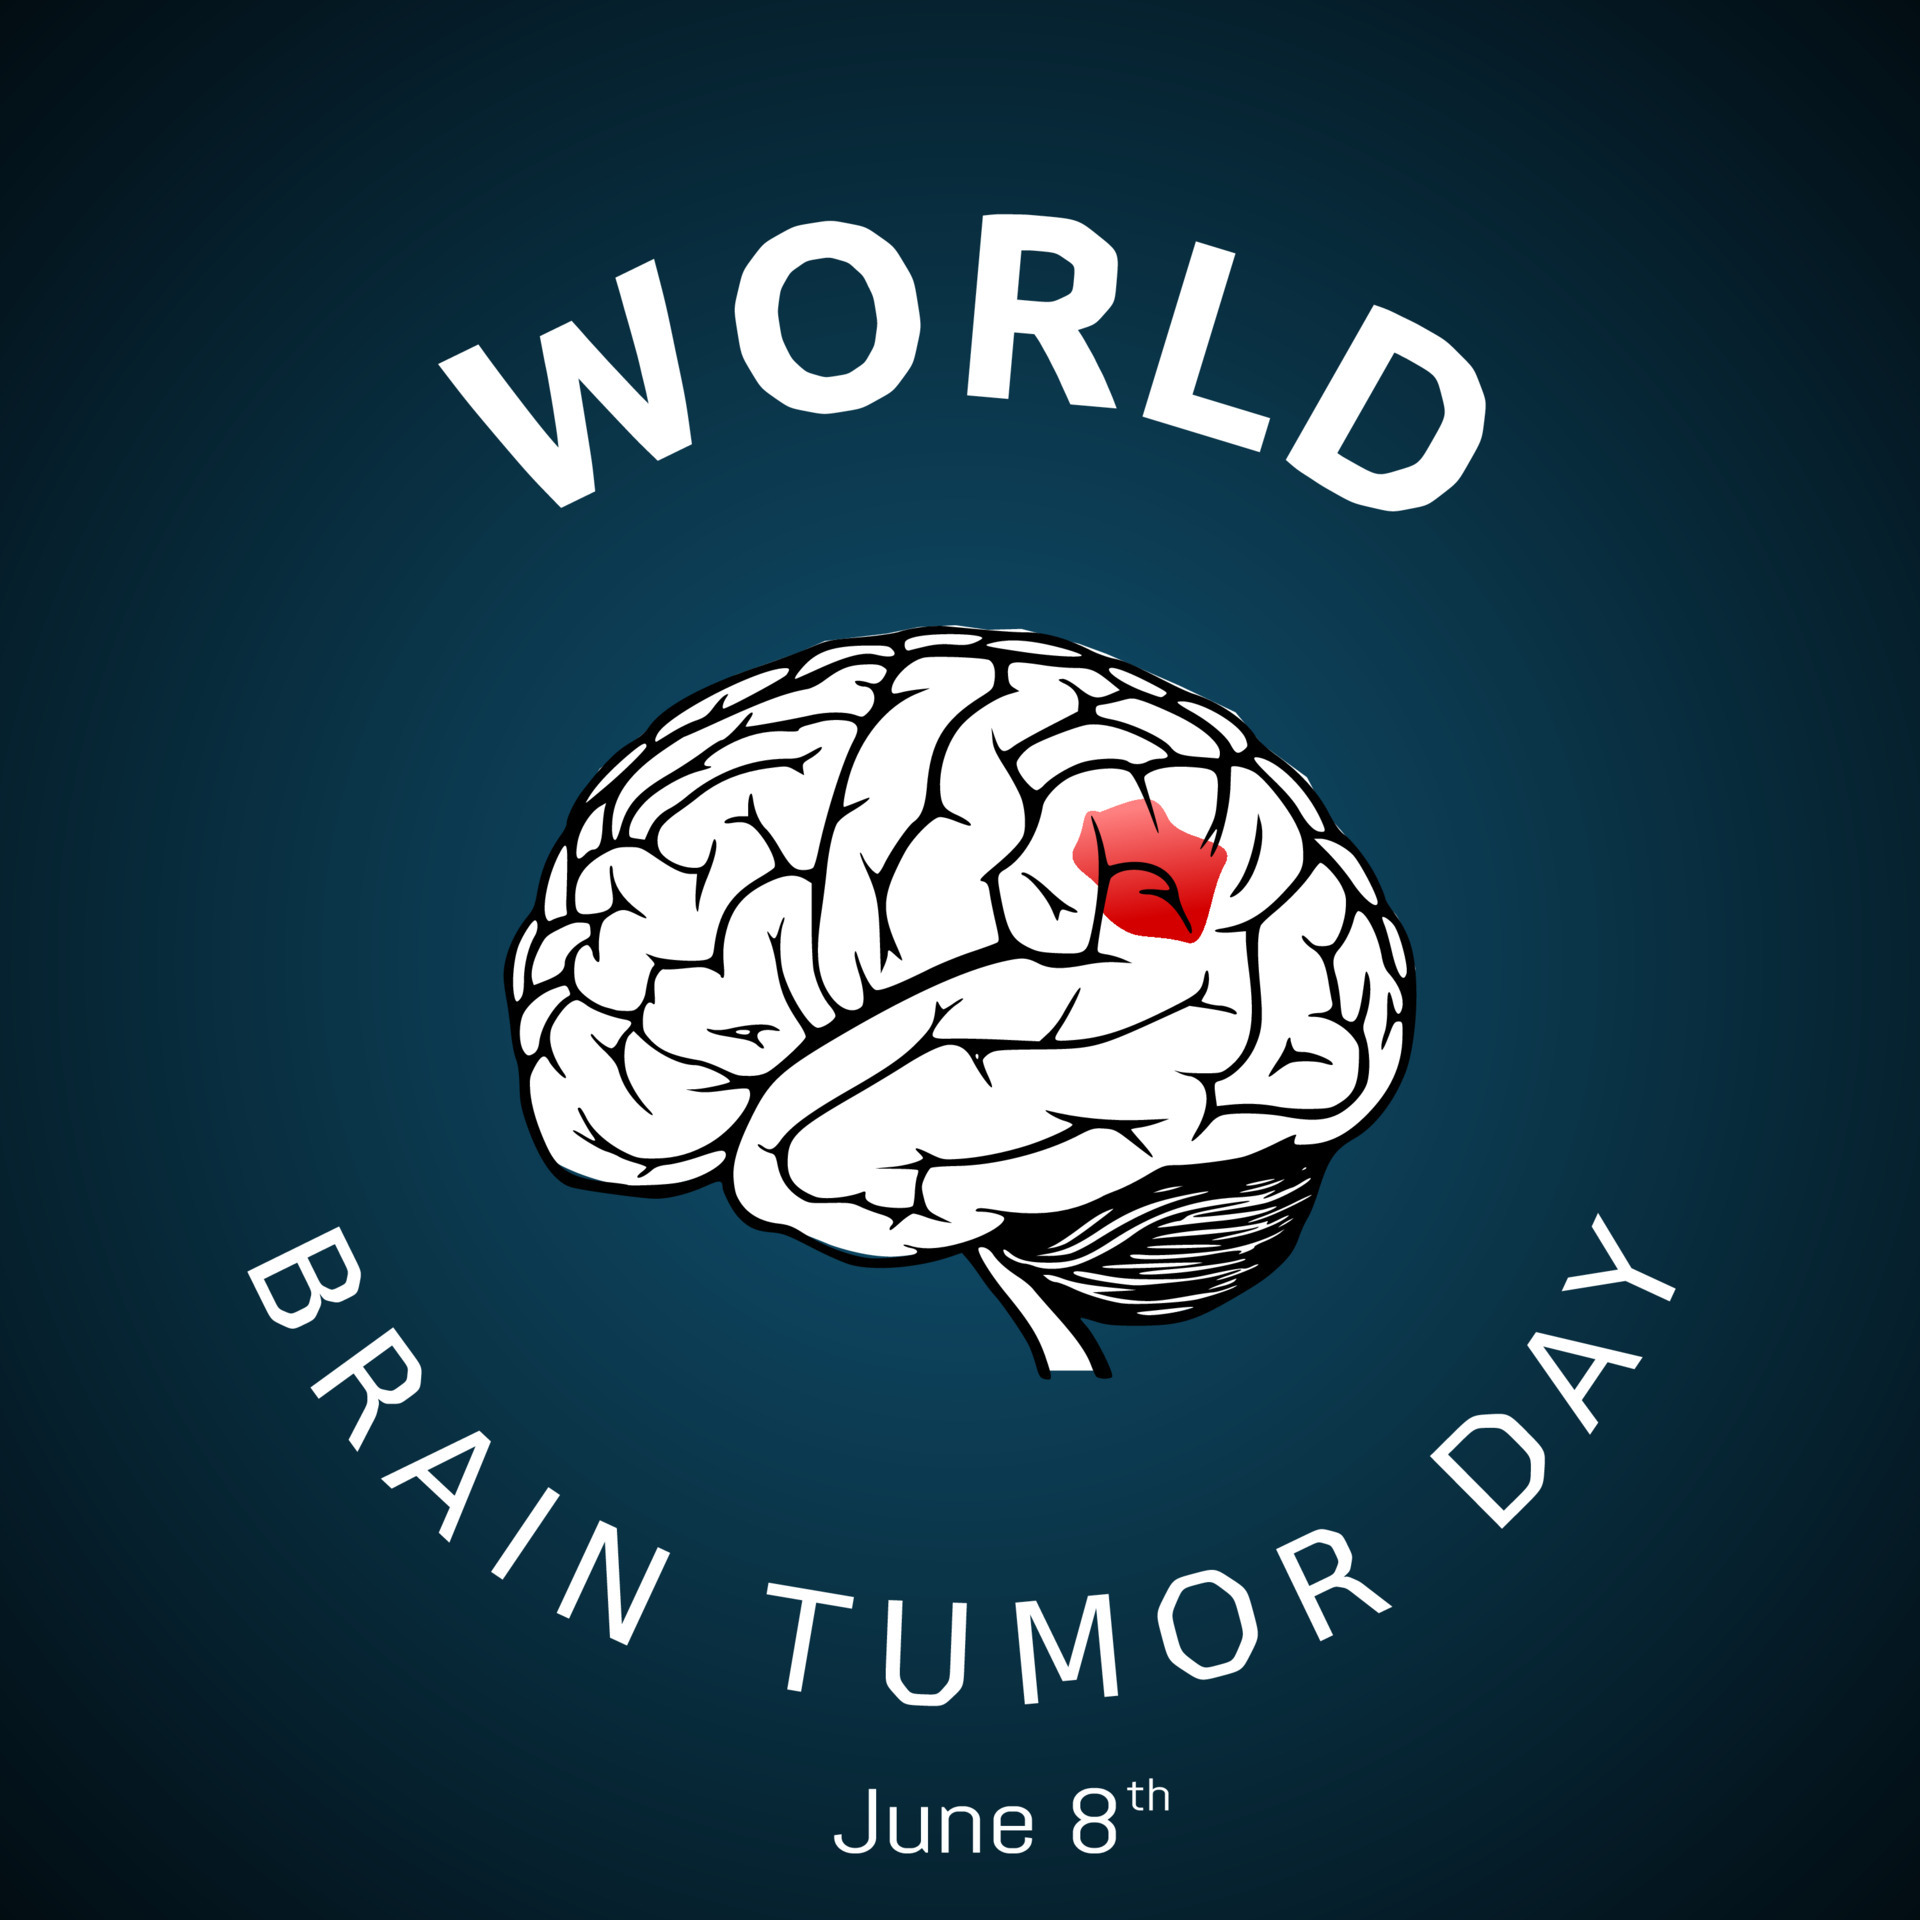 https://static.vecteezy.com/system/resources/previews/005/348/196/original/world-brain-tumor-day-illustraton-free-vector.jpg